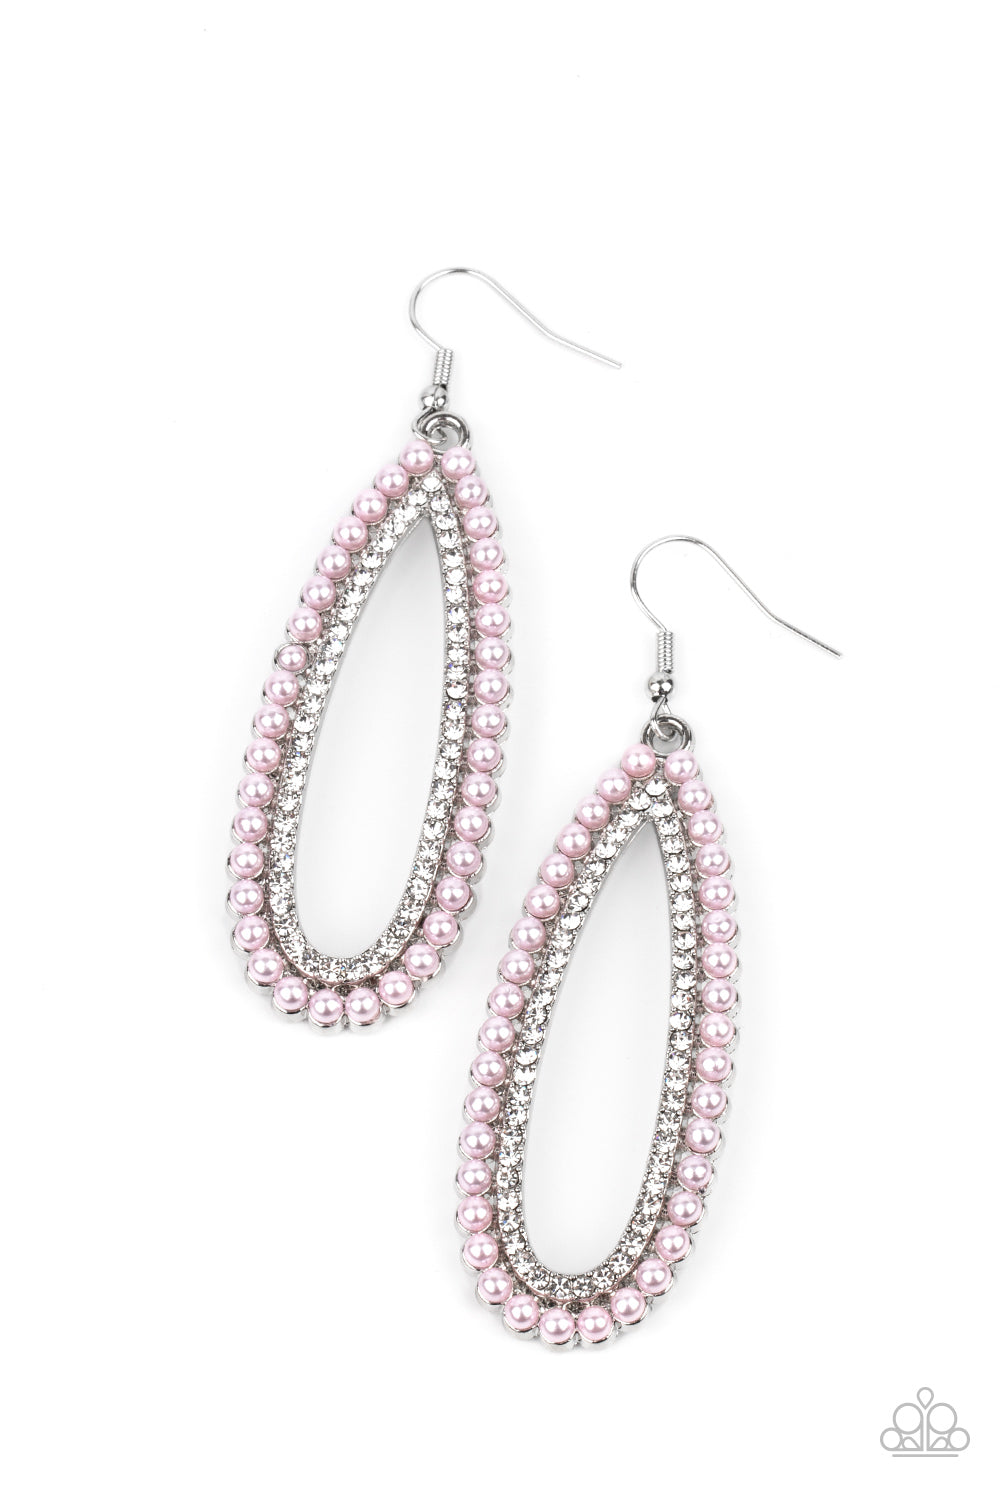 Glamorously Glowing - Pink Earrings